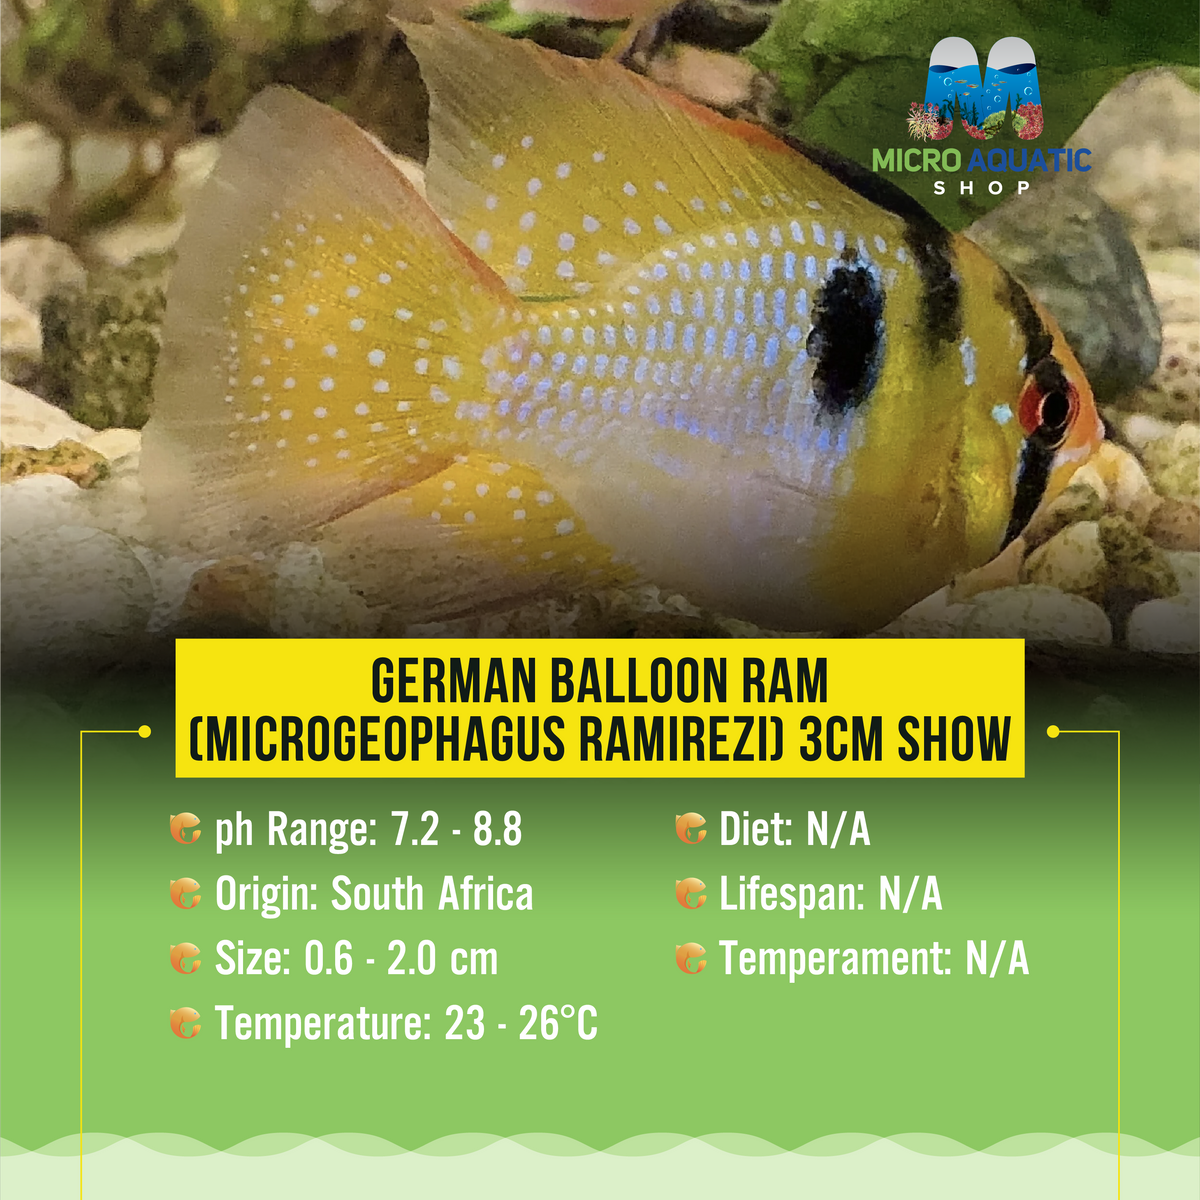 German Balloon Ram (Microgeophagus ramirezi) 3cm Show